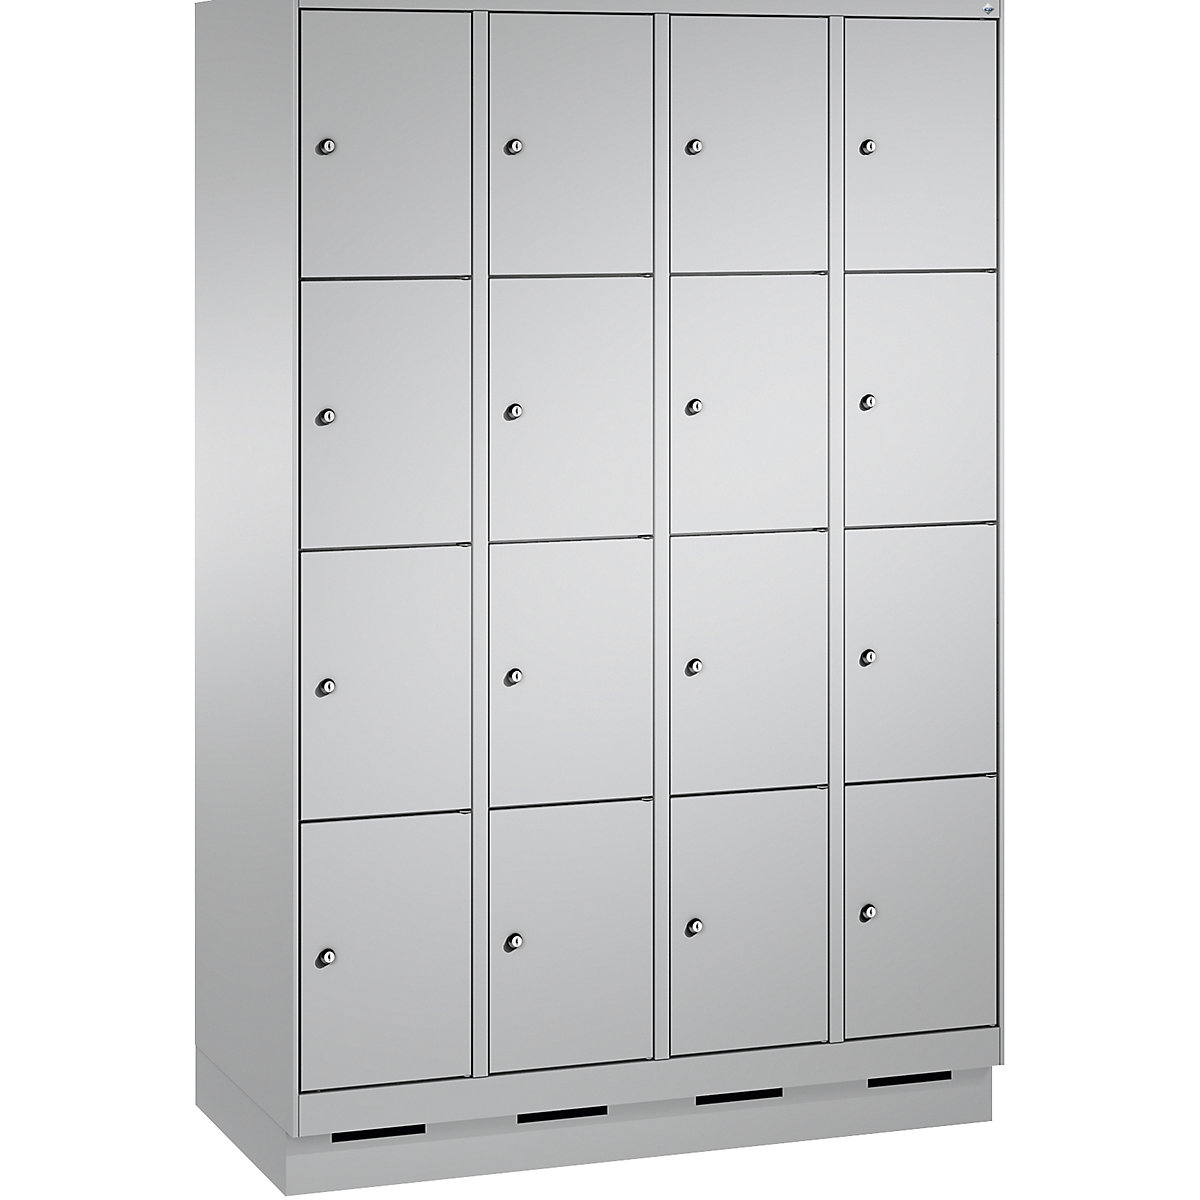 EVOLO locker unit, with plinth – C+P, 4 compartments, 4 shelf compartments each, compartment width 300 mm, white aluminium / white aluminium